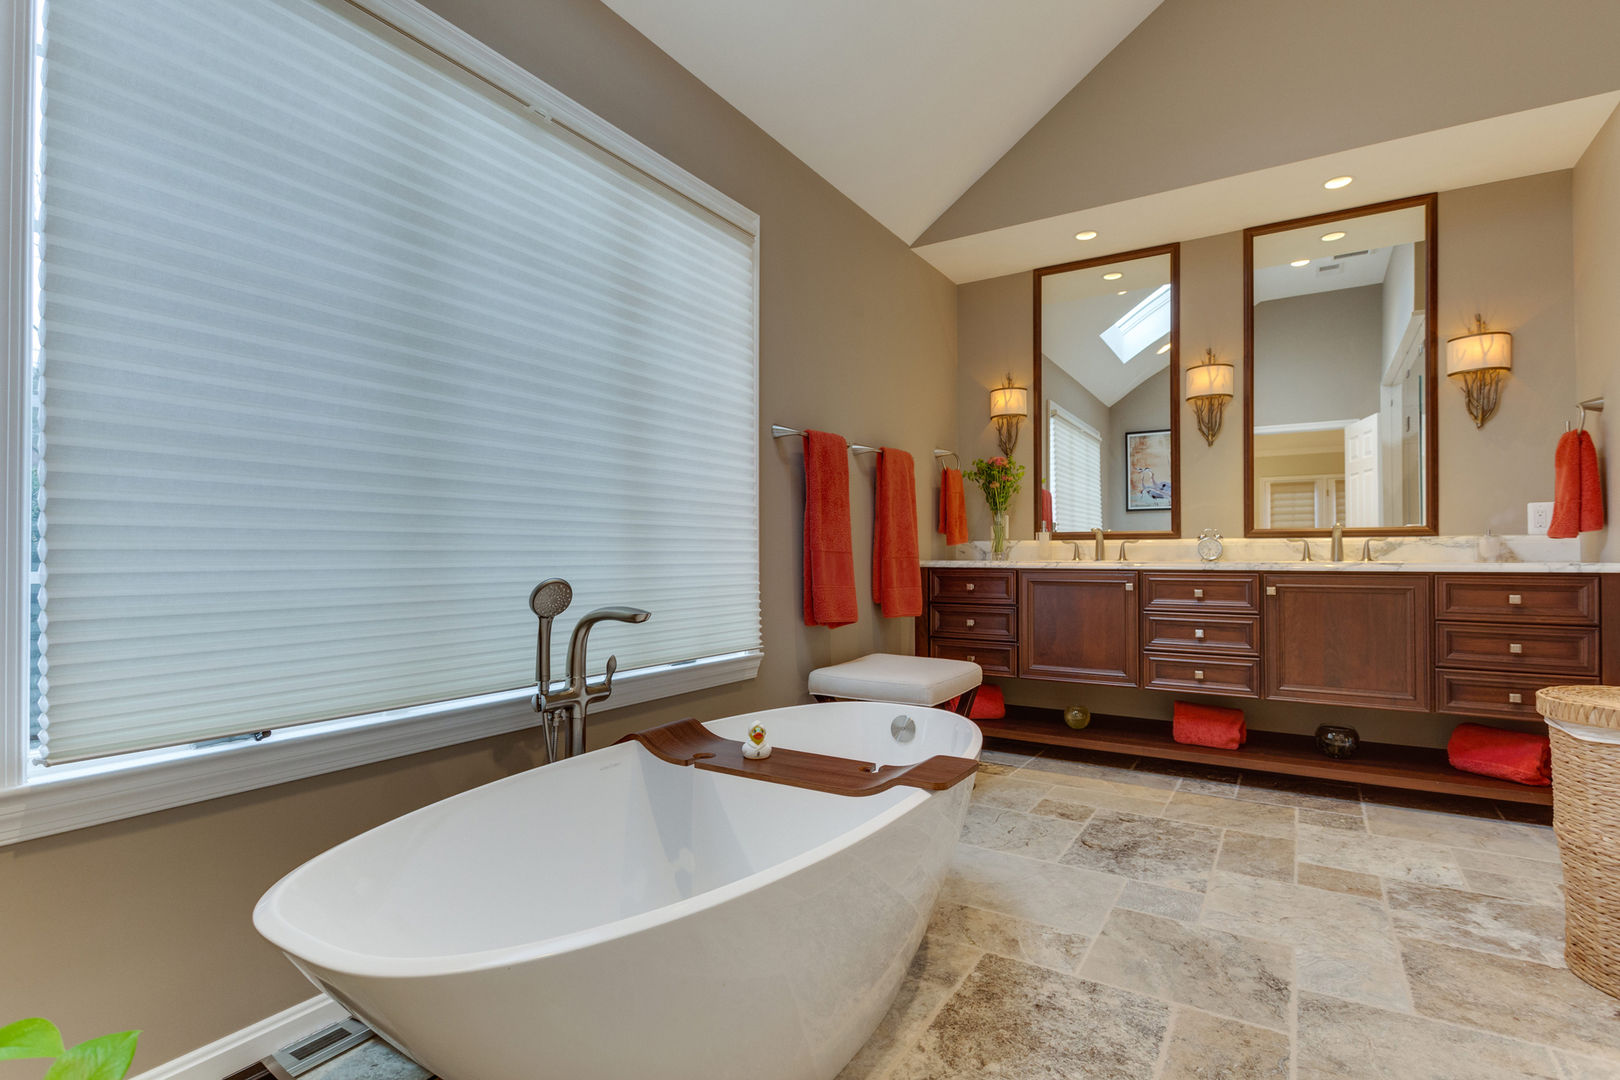 Universal Design Master Suite Renovation in McLean, VA BOWA - Design Build Experts Minimalist bathroom